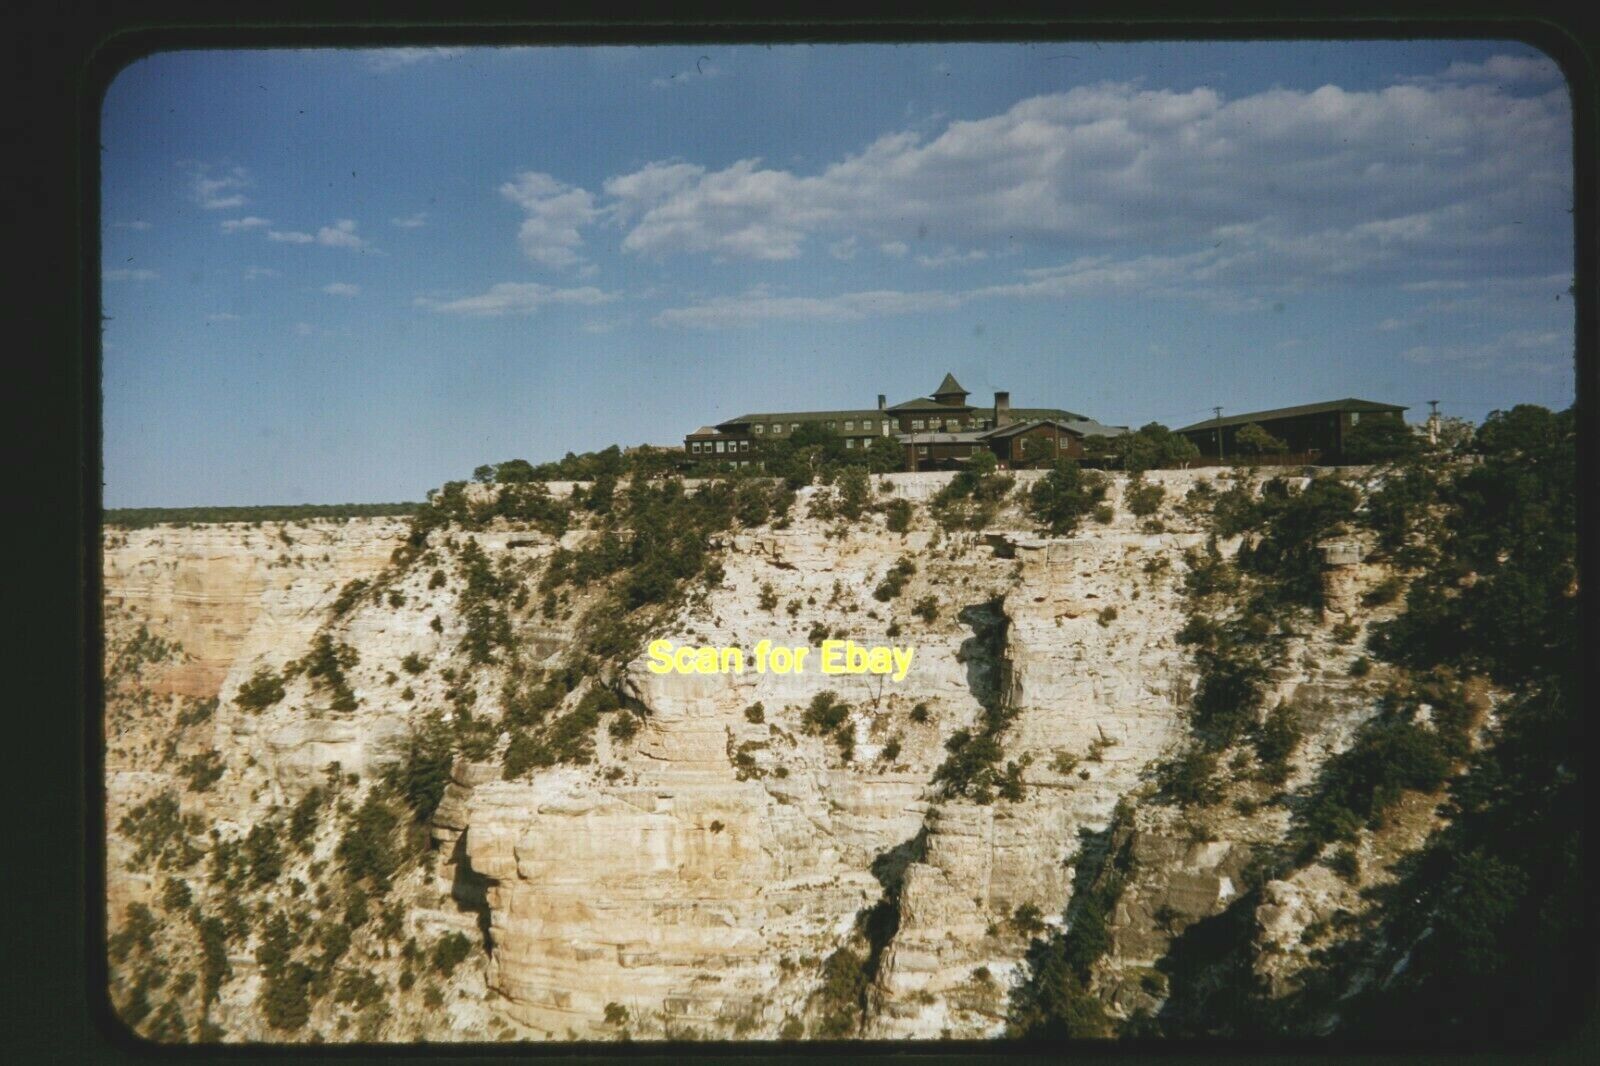 Grand Canyon National Park, Arizona in mid 1950's, Kodachrome Slide aa 13-18b